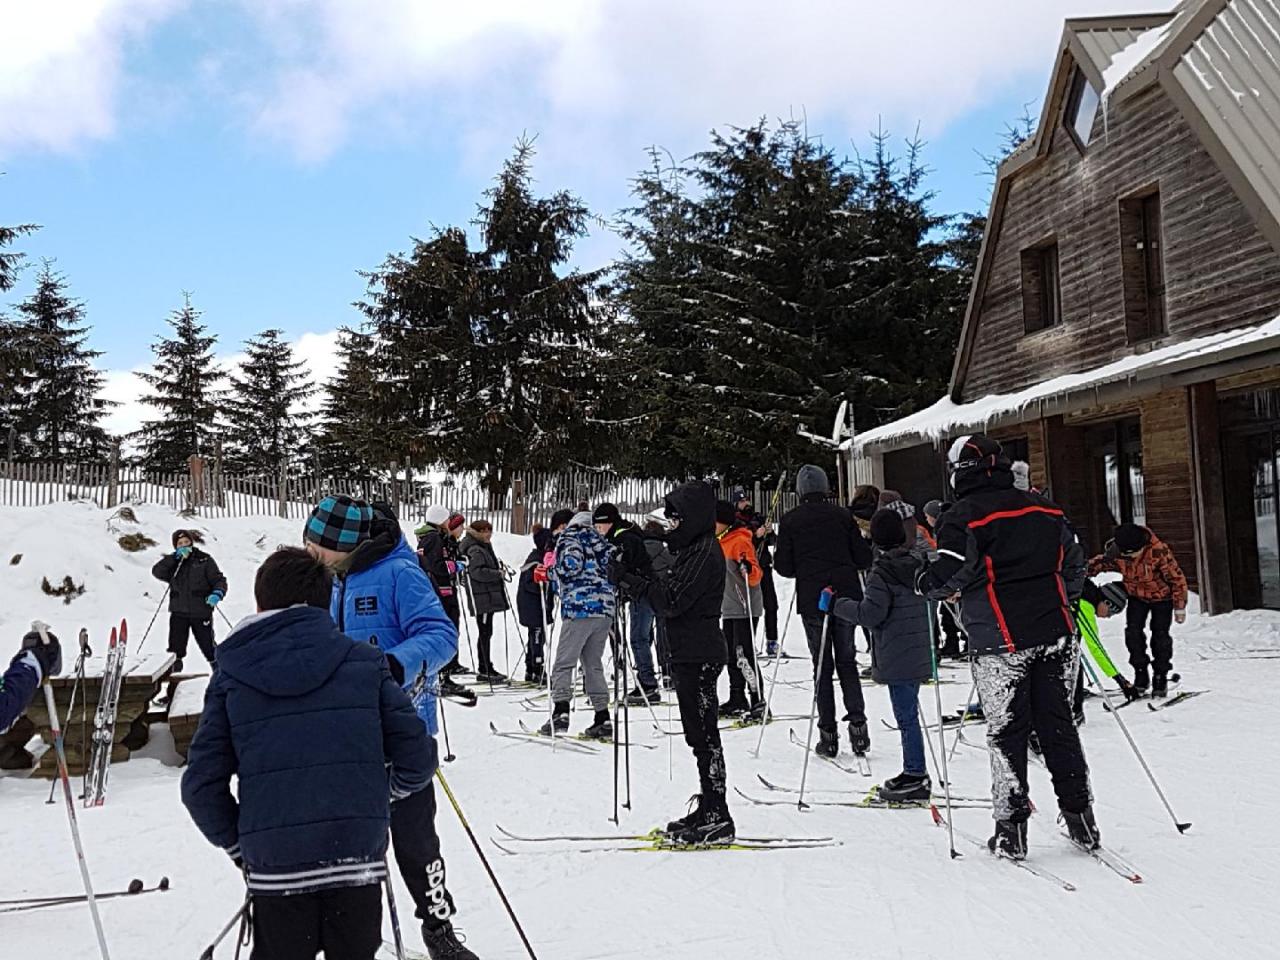 Sortie ski collège Hiver 2018